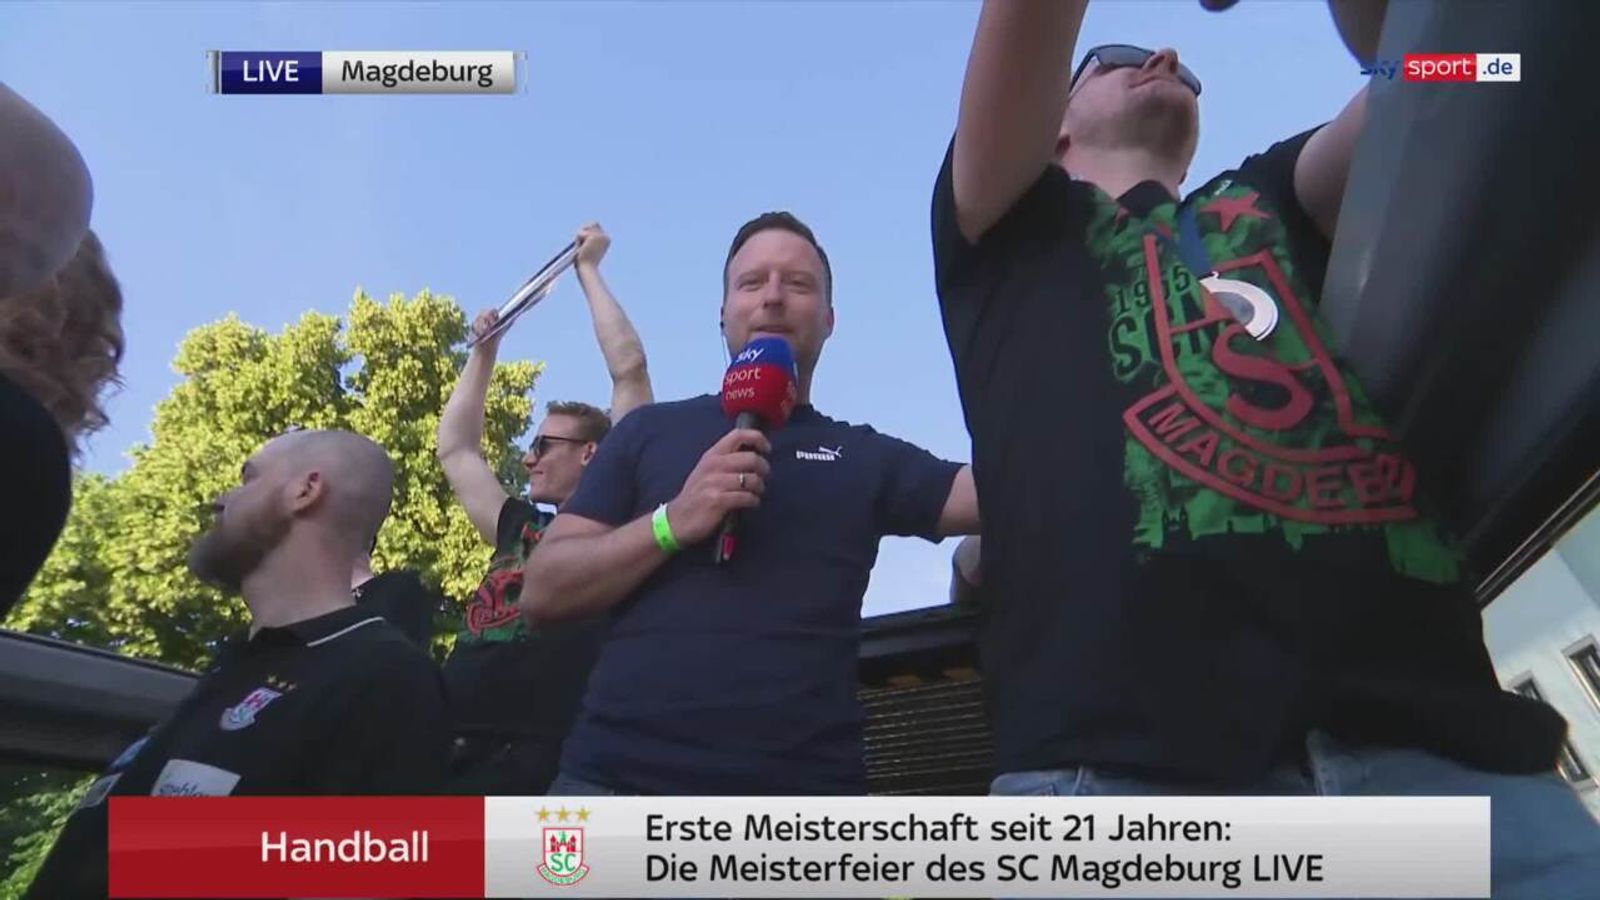 Handball Sky mittendrin! Die Meisterfeier des SC Magdeburg Handball News Sky Sport